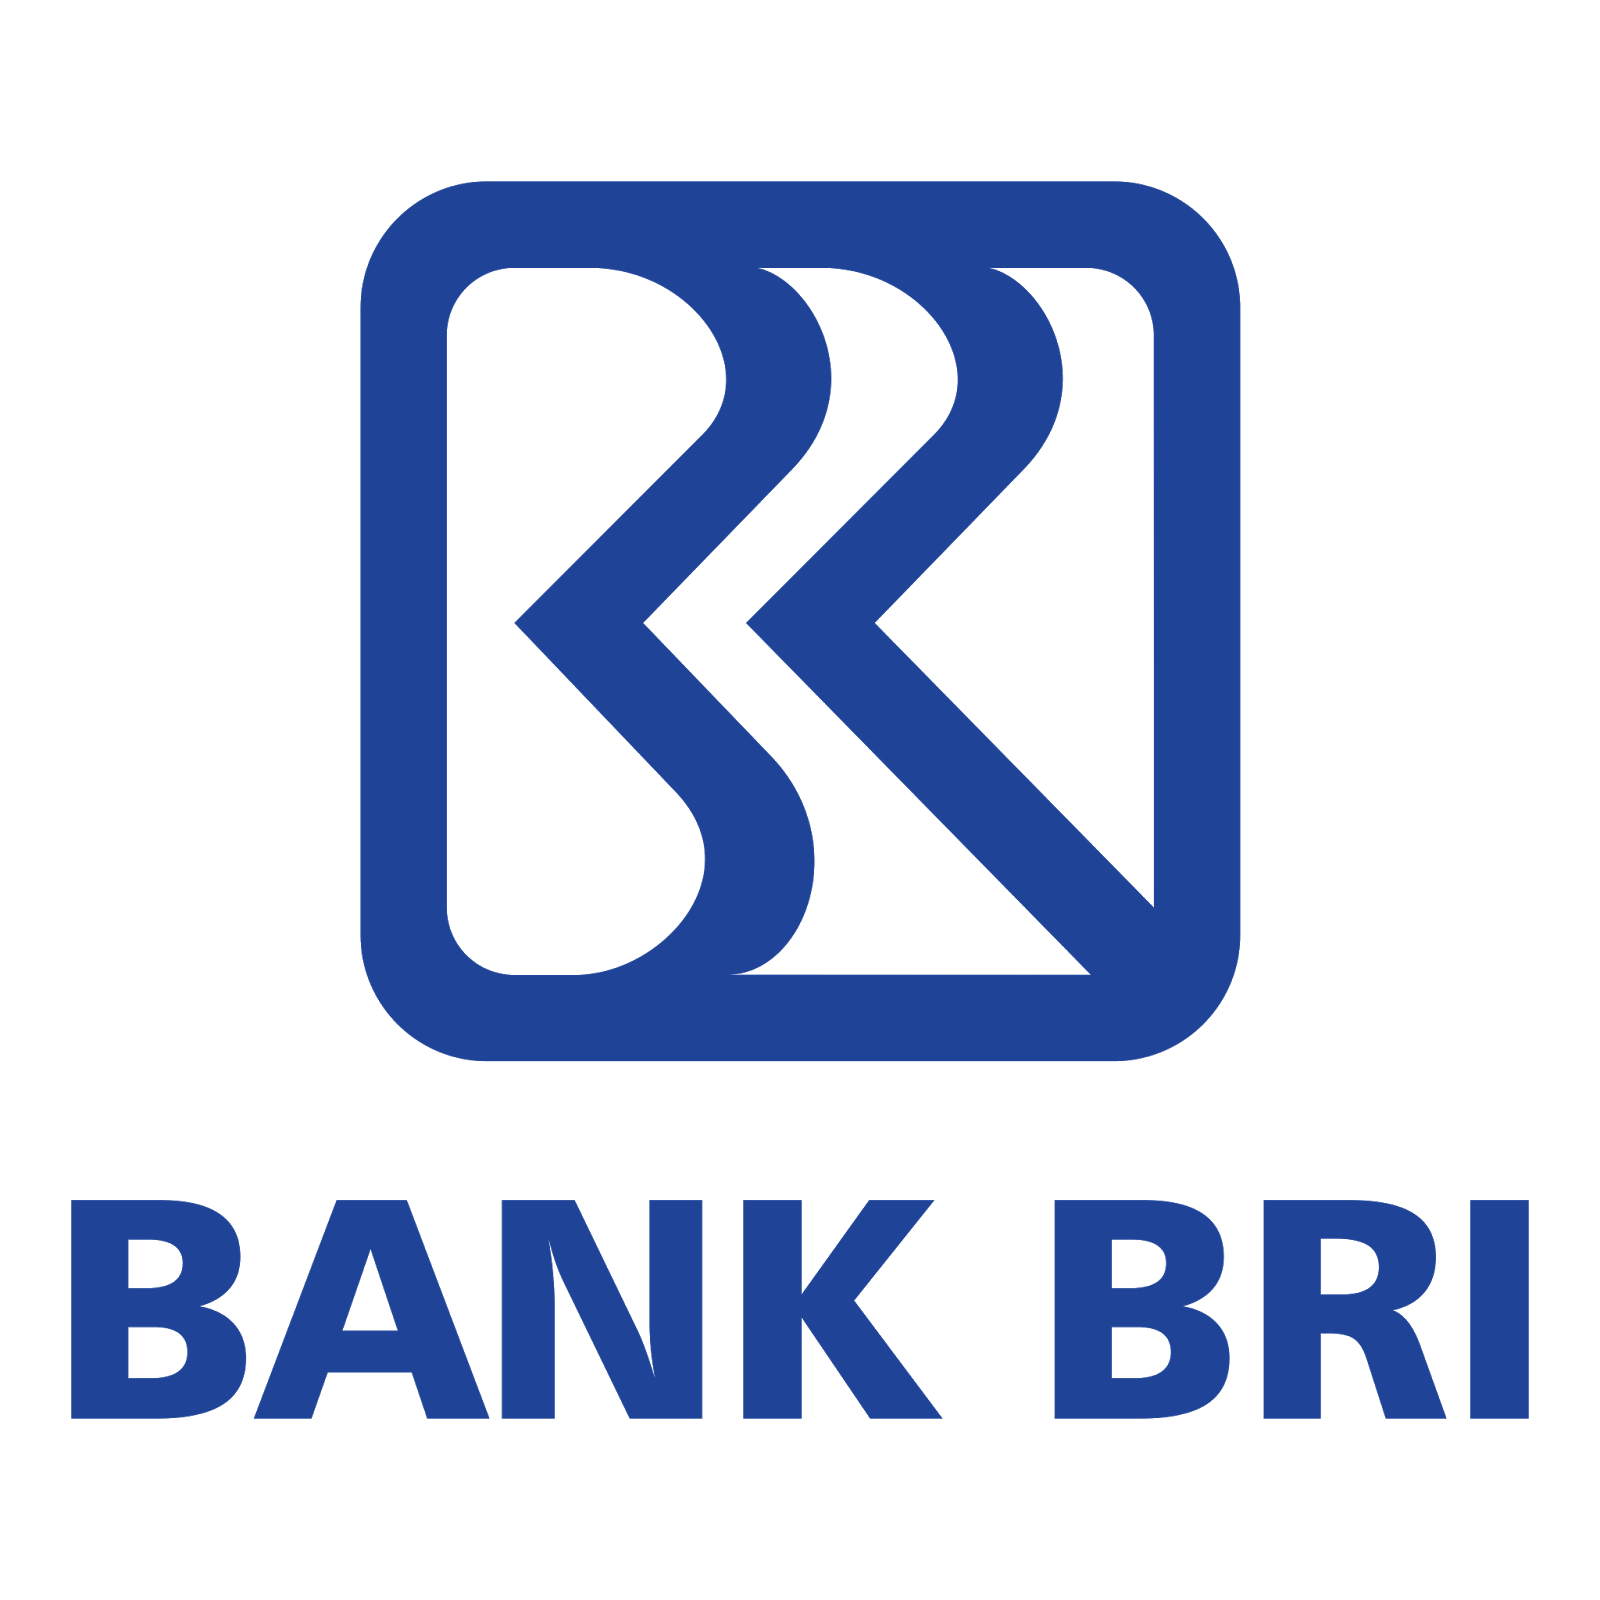 kisspng-logo-bank-rakyat-indonesia-vector-graphics-brand-p-logo-bank-all-vector-file-coreldraw-free-download-5b6c1a04d3d7b7.6322267715338112048677 (1)